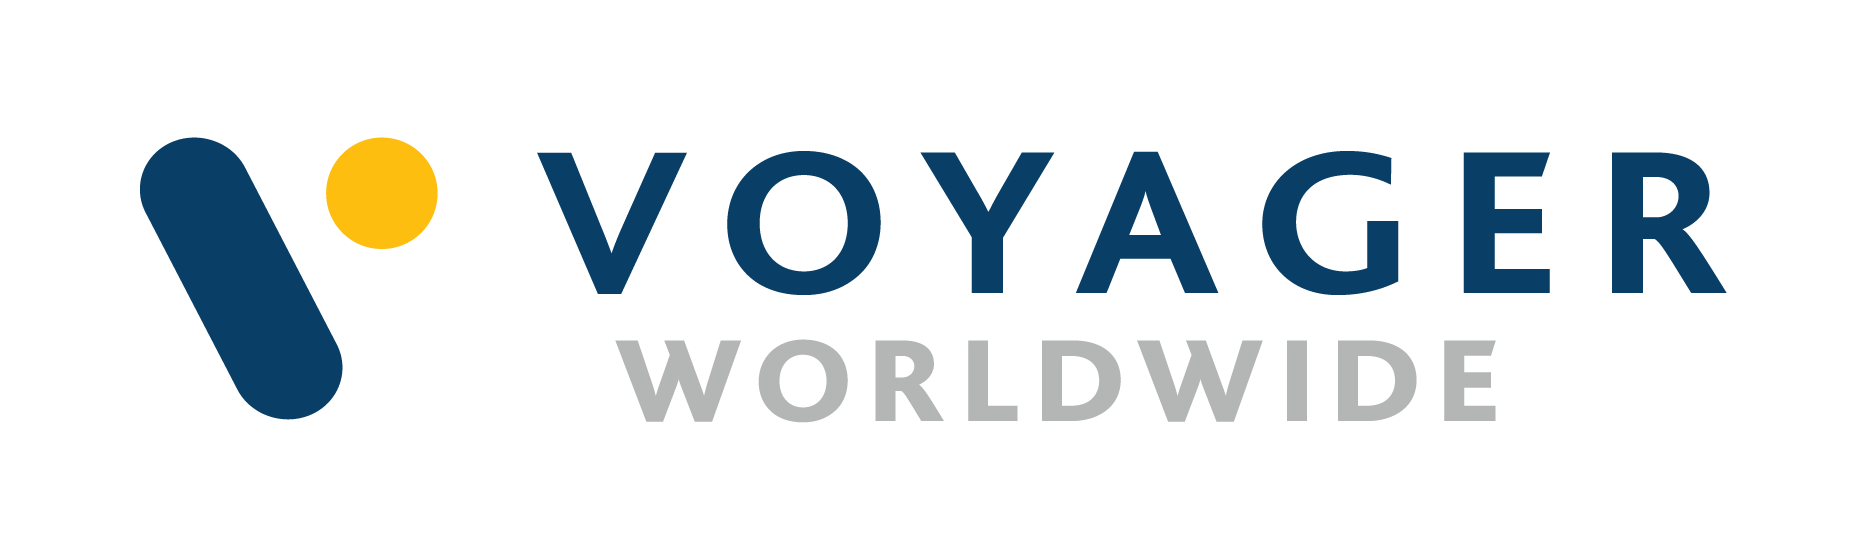 voyager worldwide logo